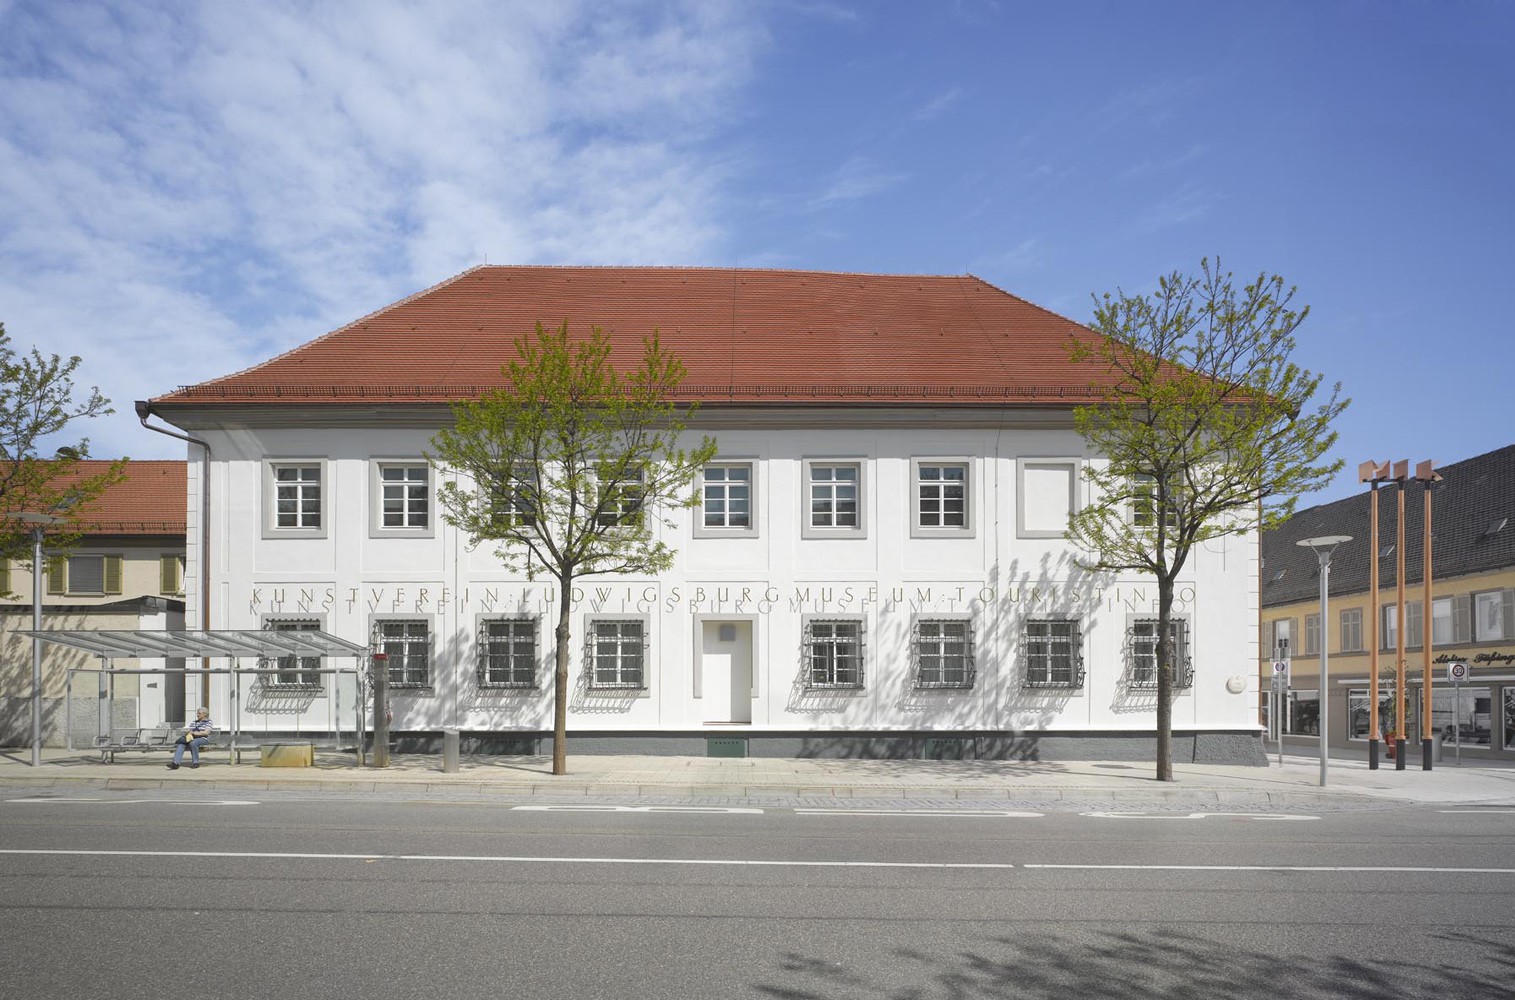 Stadtmuseum und Kunstverein Ludwigsburg